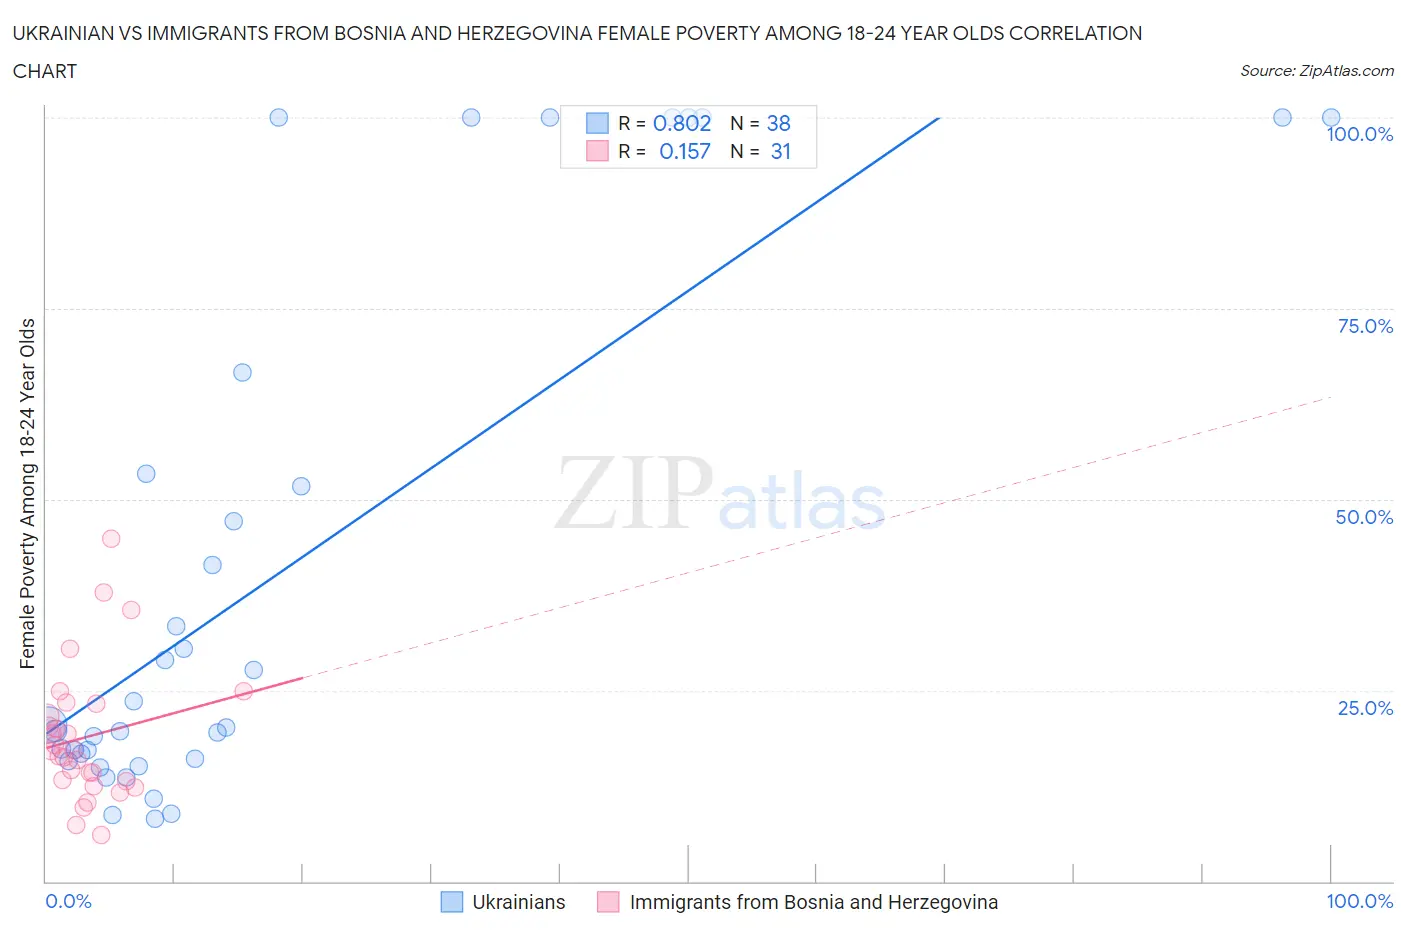 Ukrainian vs Immigrants from Bosnia and Herzegovina Female Poverty Among 18-24 Year Olds